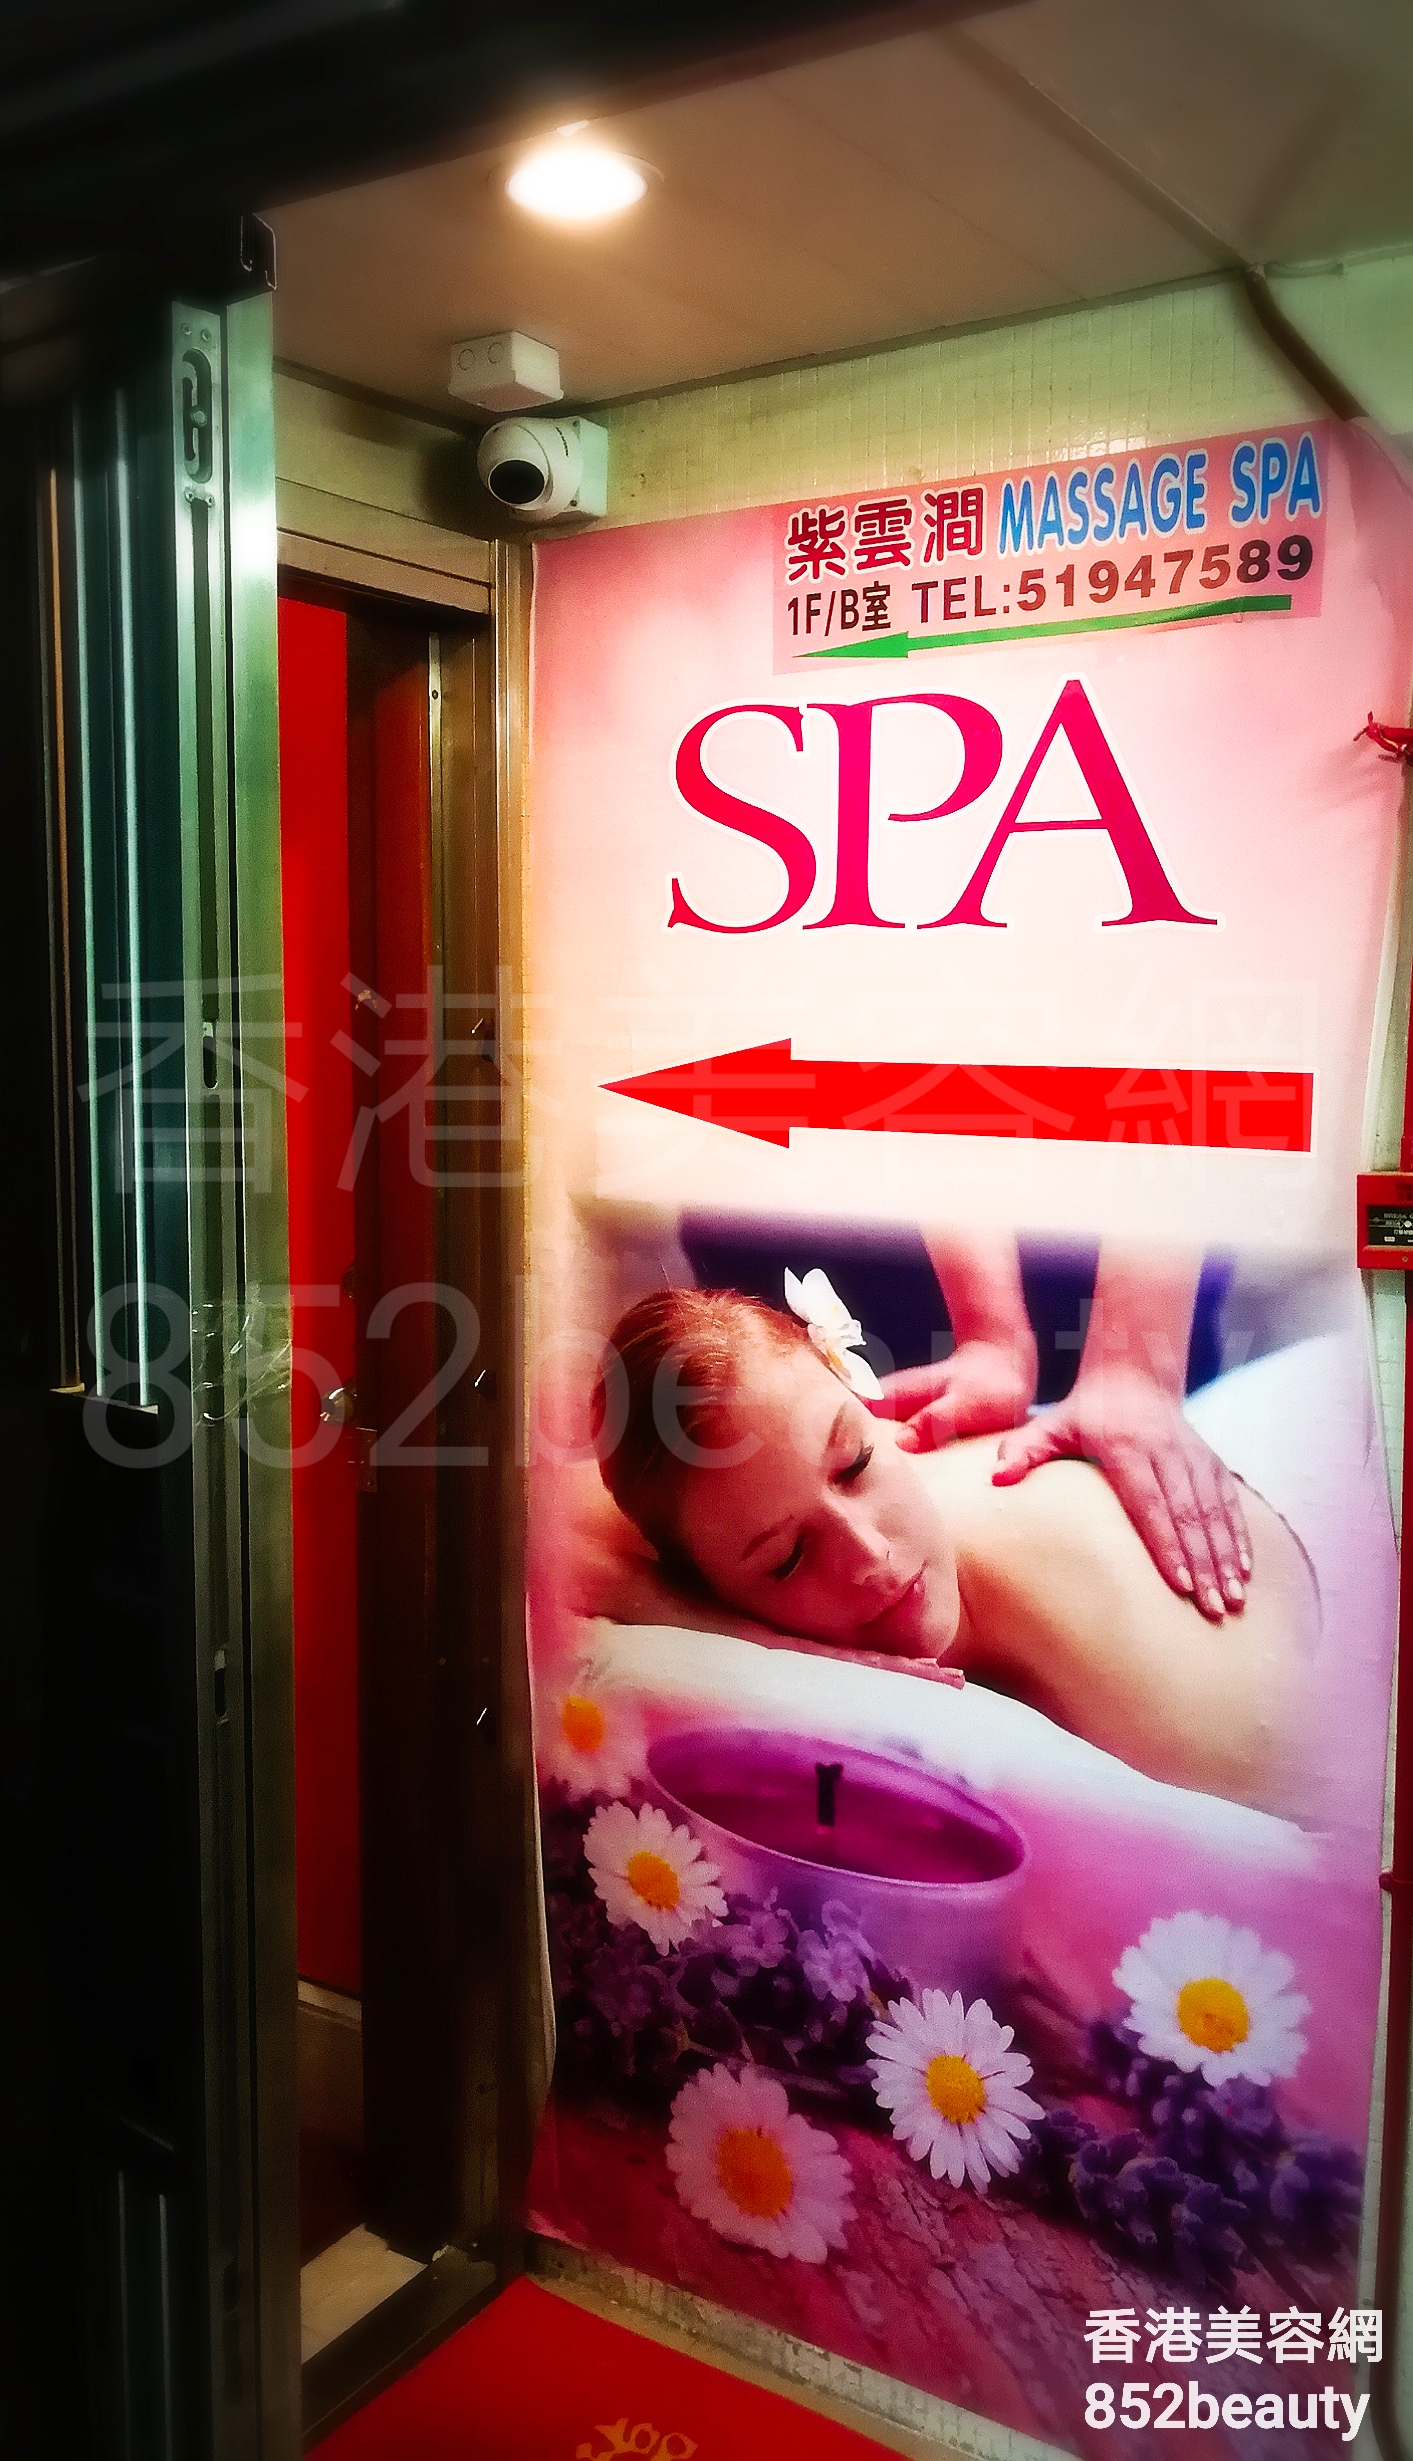 Massage/SPA: 紫雲澗